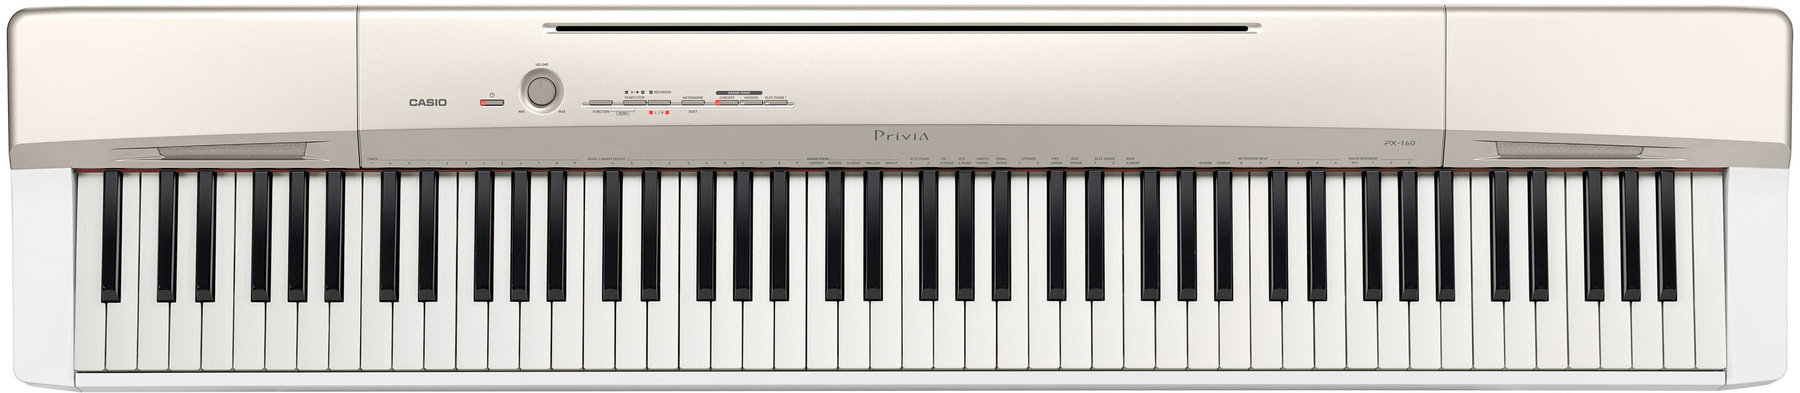 Digital Stage Piano Casio PX-160GD Digital Stage Piano